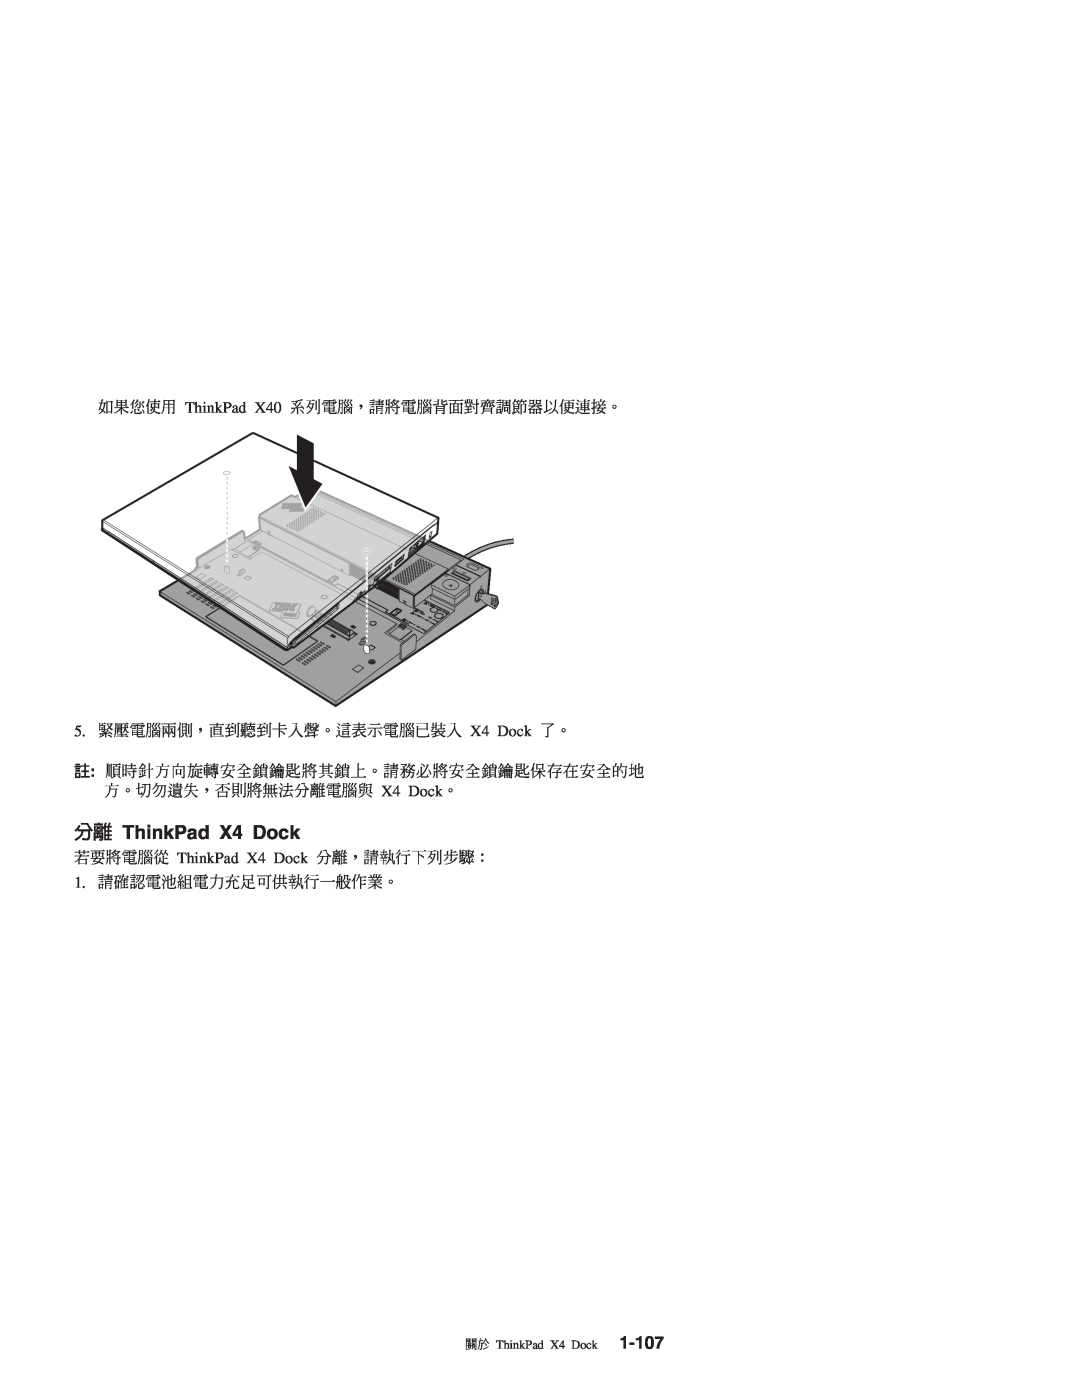 IBM manual ≈ ThinkPad X4 Dock, pGz ThinkPad X40 tCqúA NqúI ∩⌠ HKs C, ≥úqúΓ A Ñ dJnCoϕ qúw J X4 Dock FC, wΦV αw Ω NΣΩWC 